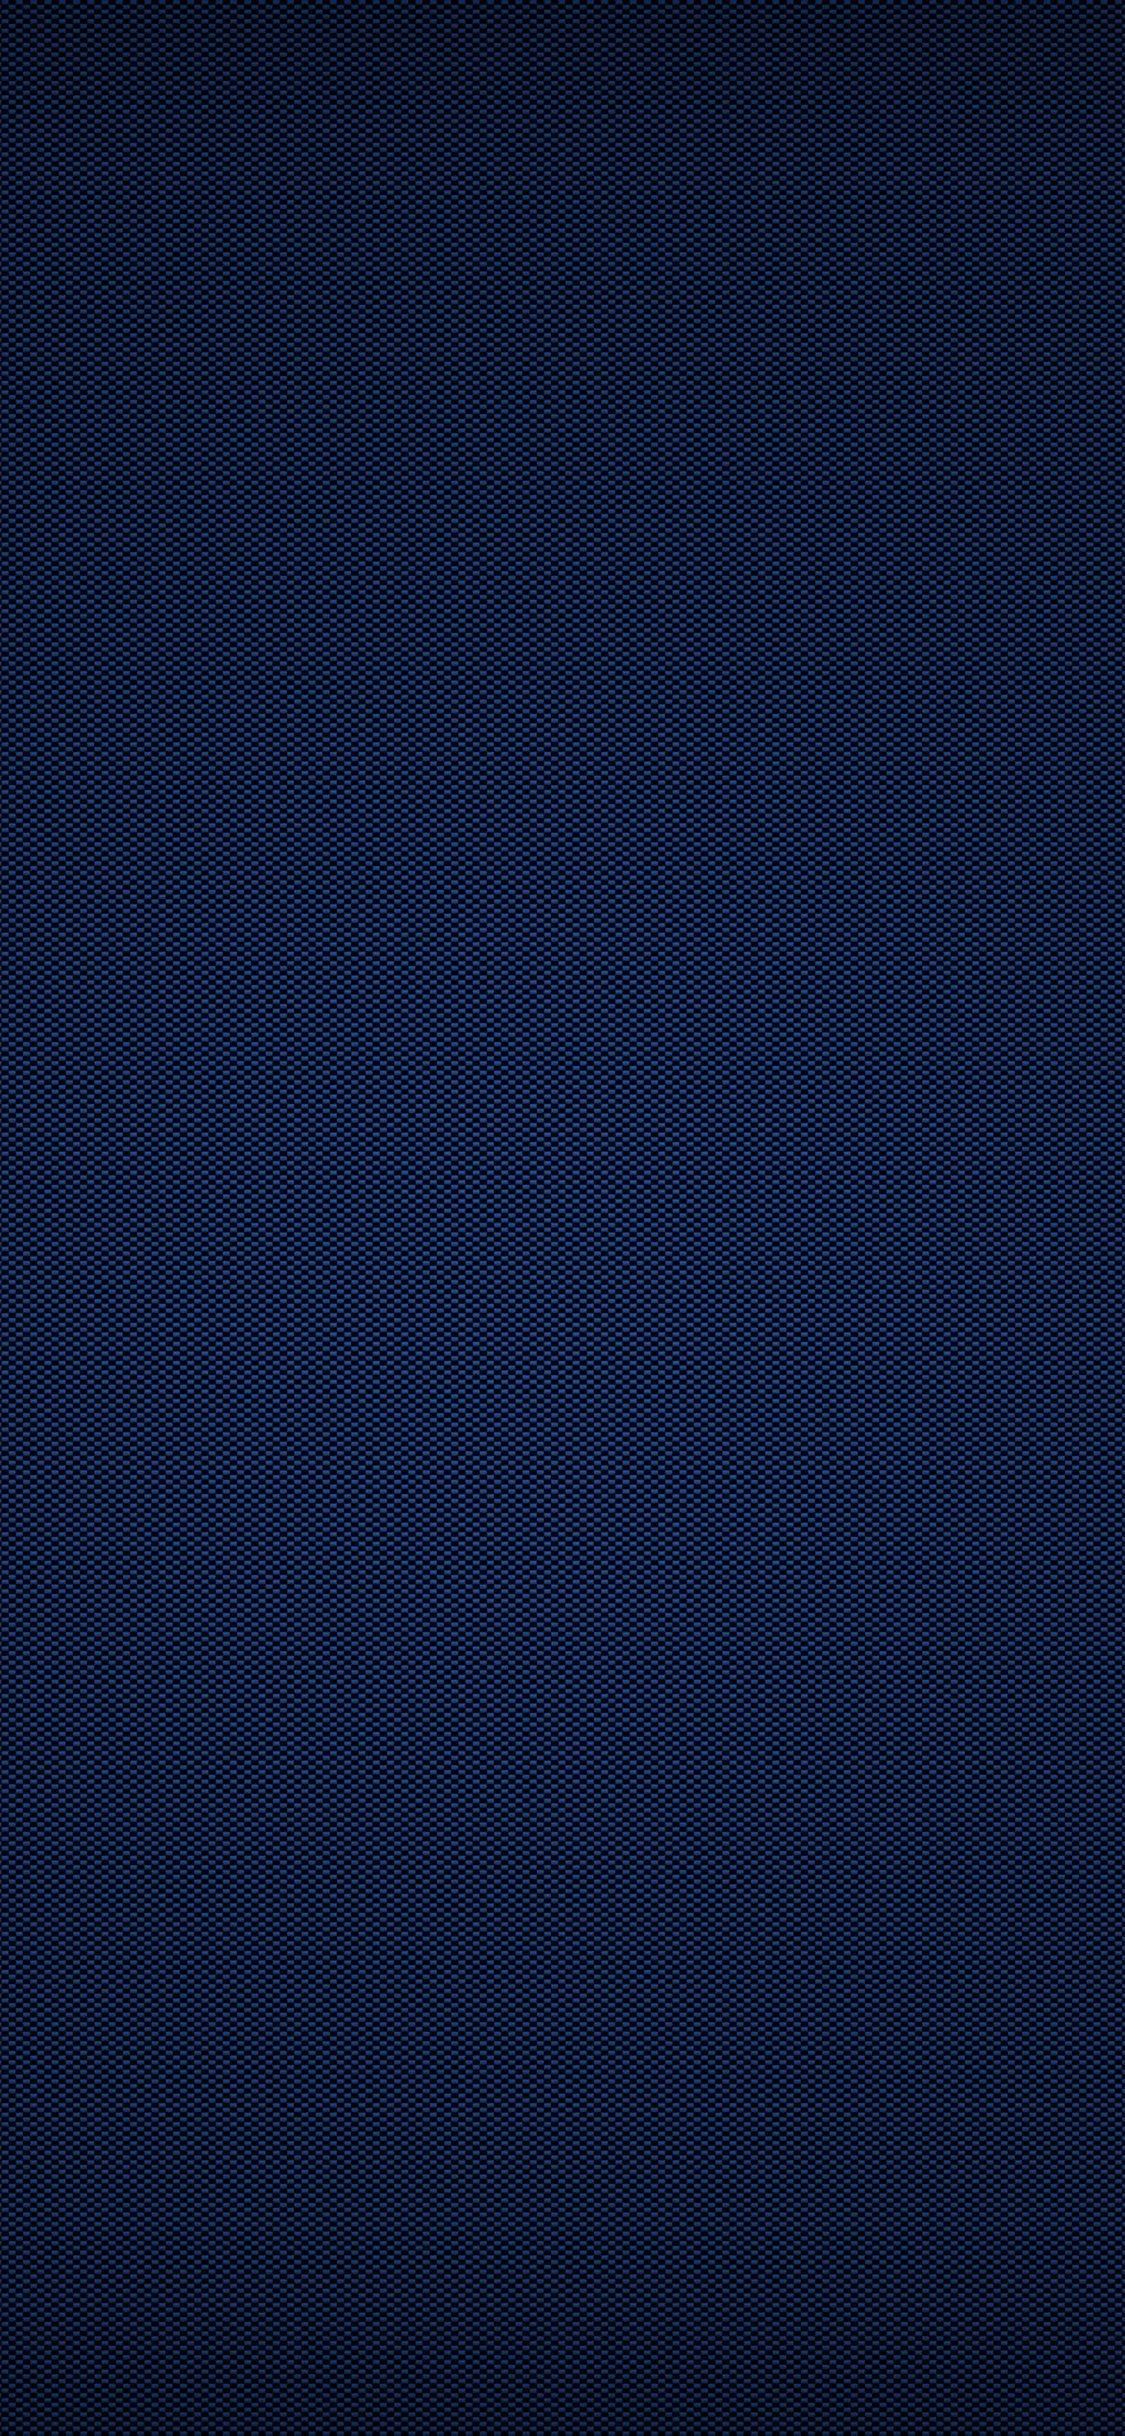 Blue Dark Background Images | Free iPhone & Zoom HD Wallpapers & Vectors -  rawpixel